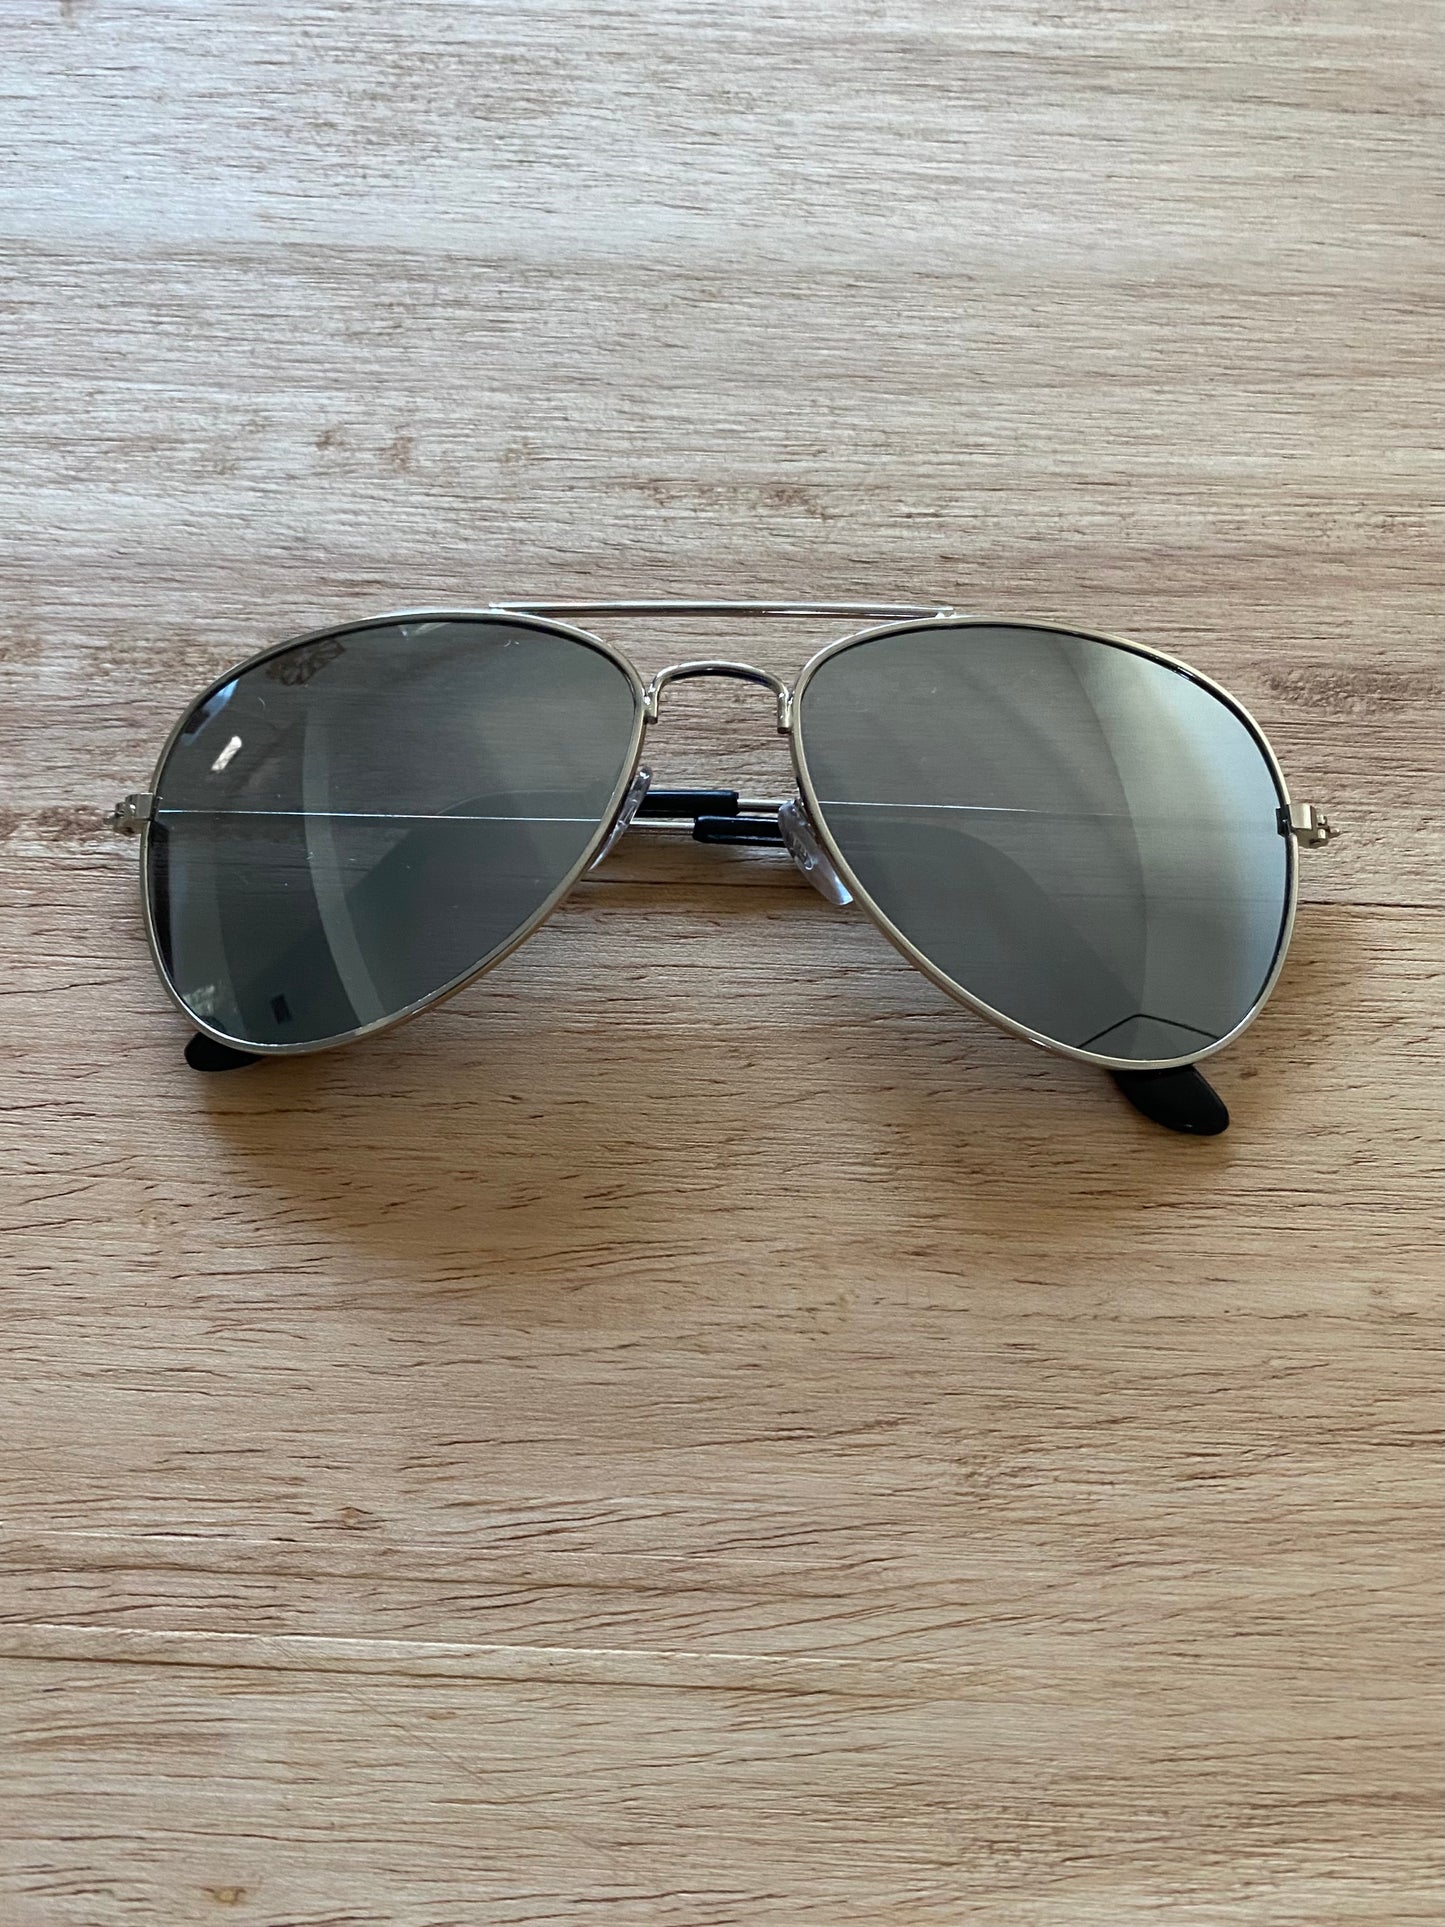 The Aviator Sunglasses